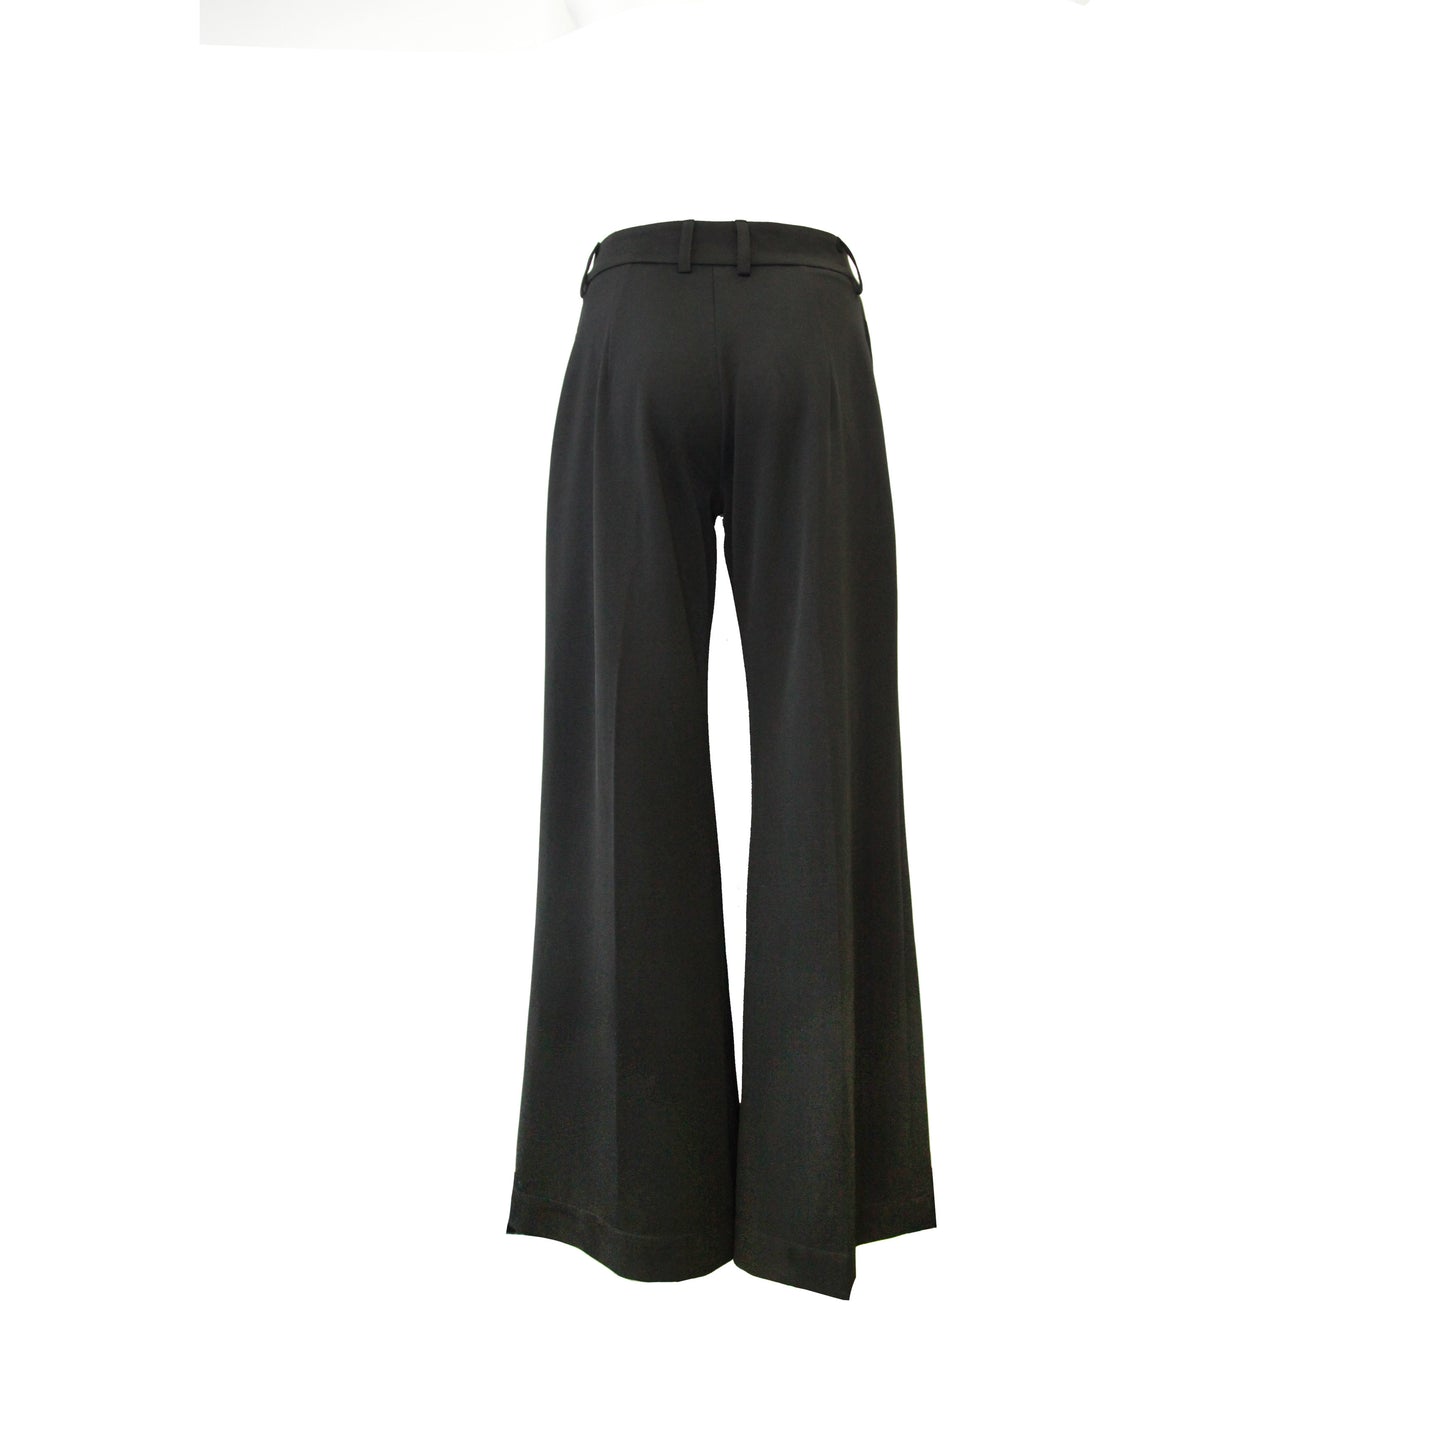 DANSHUU Tailored Daily Trousers